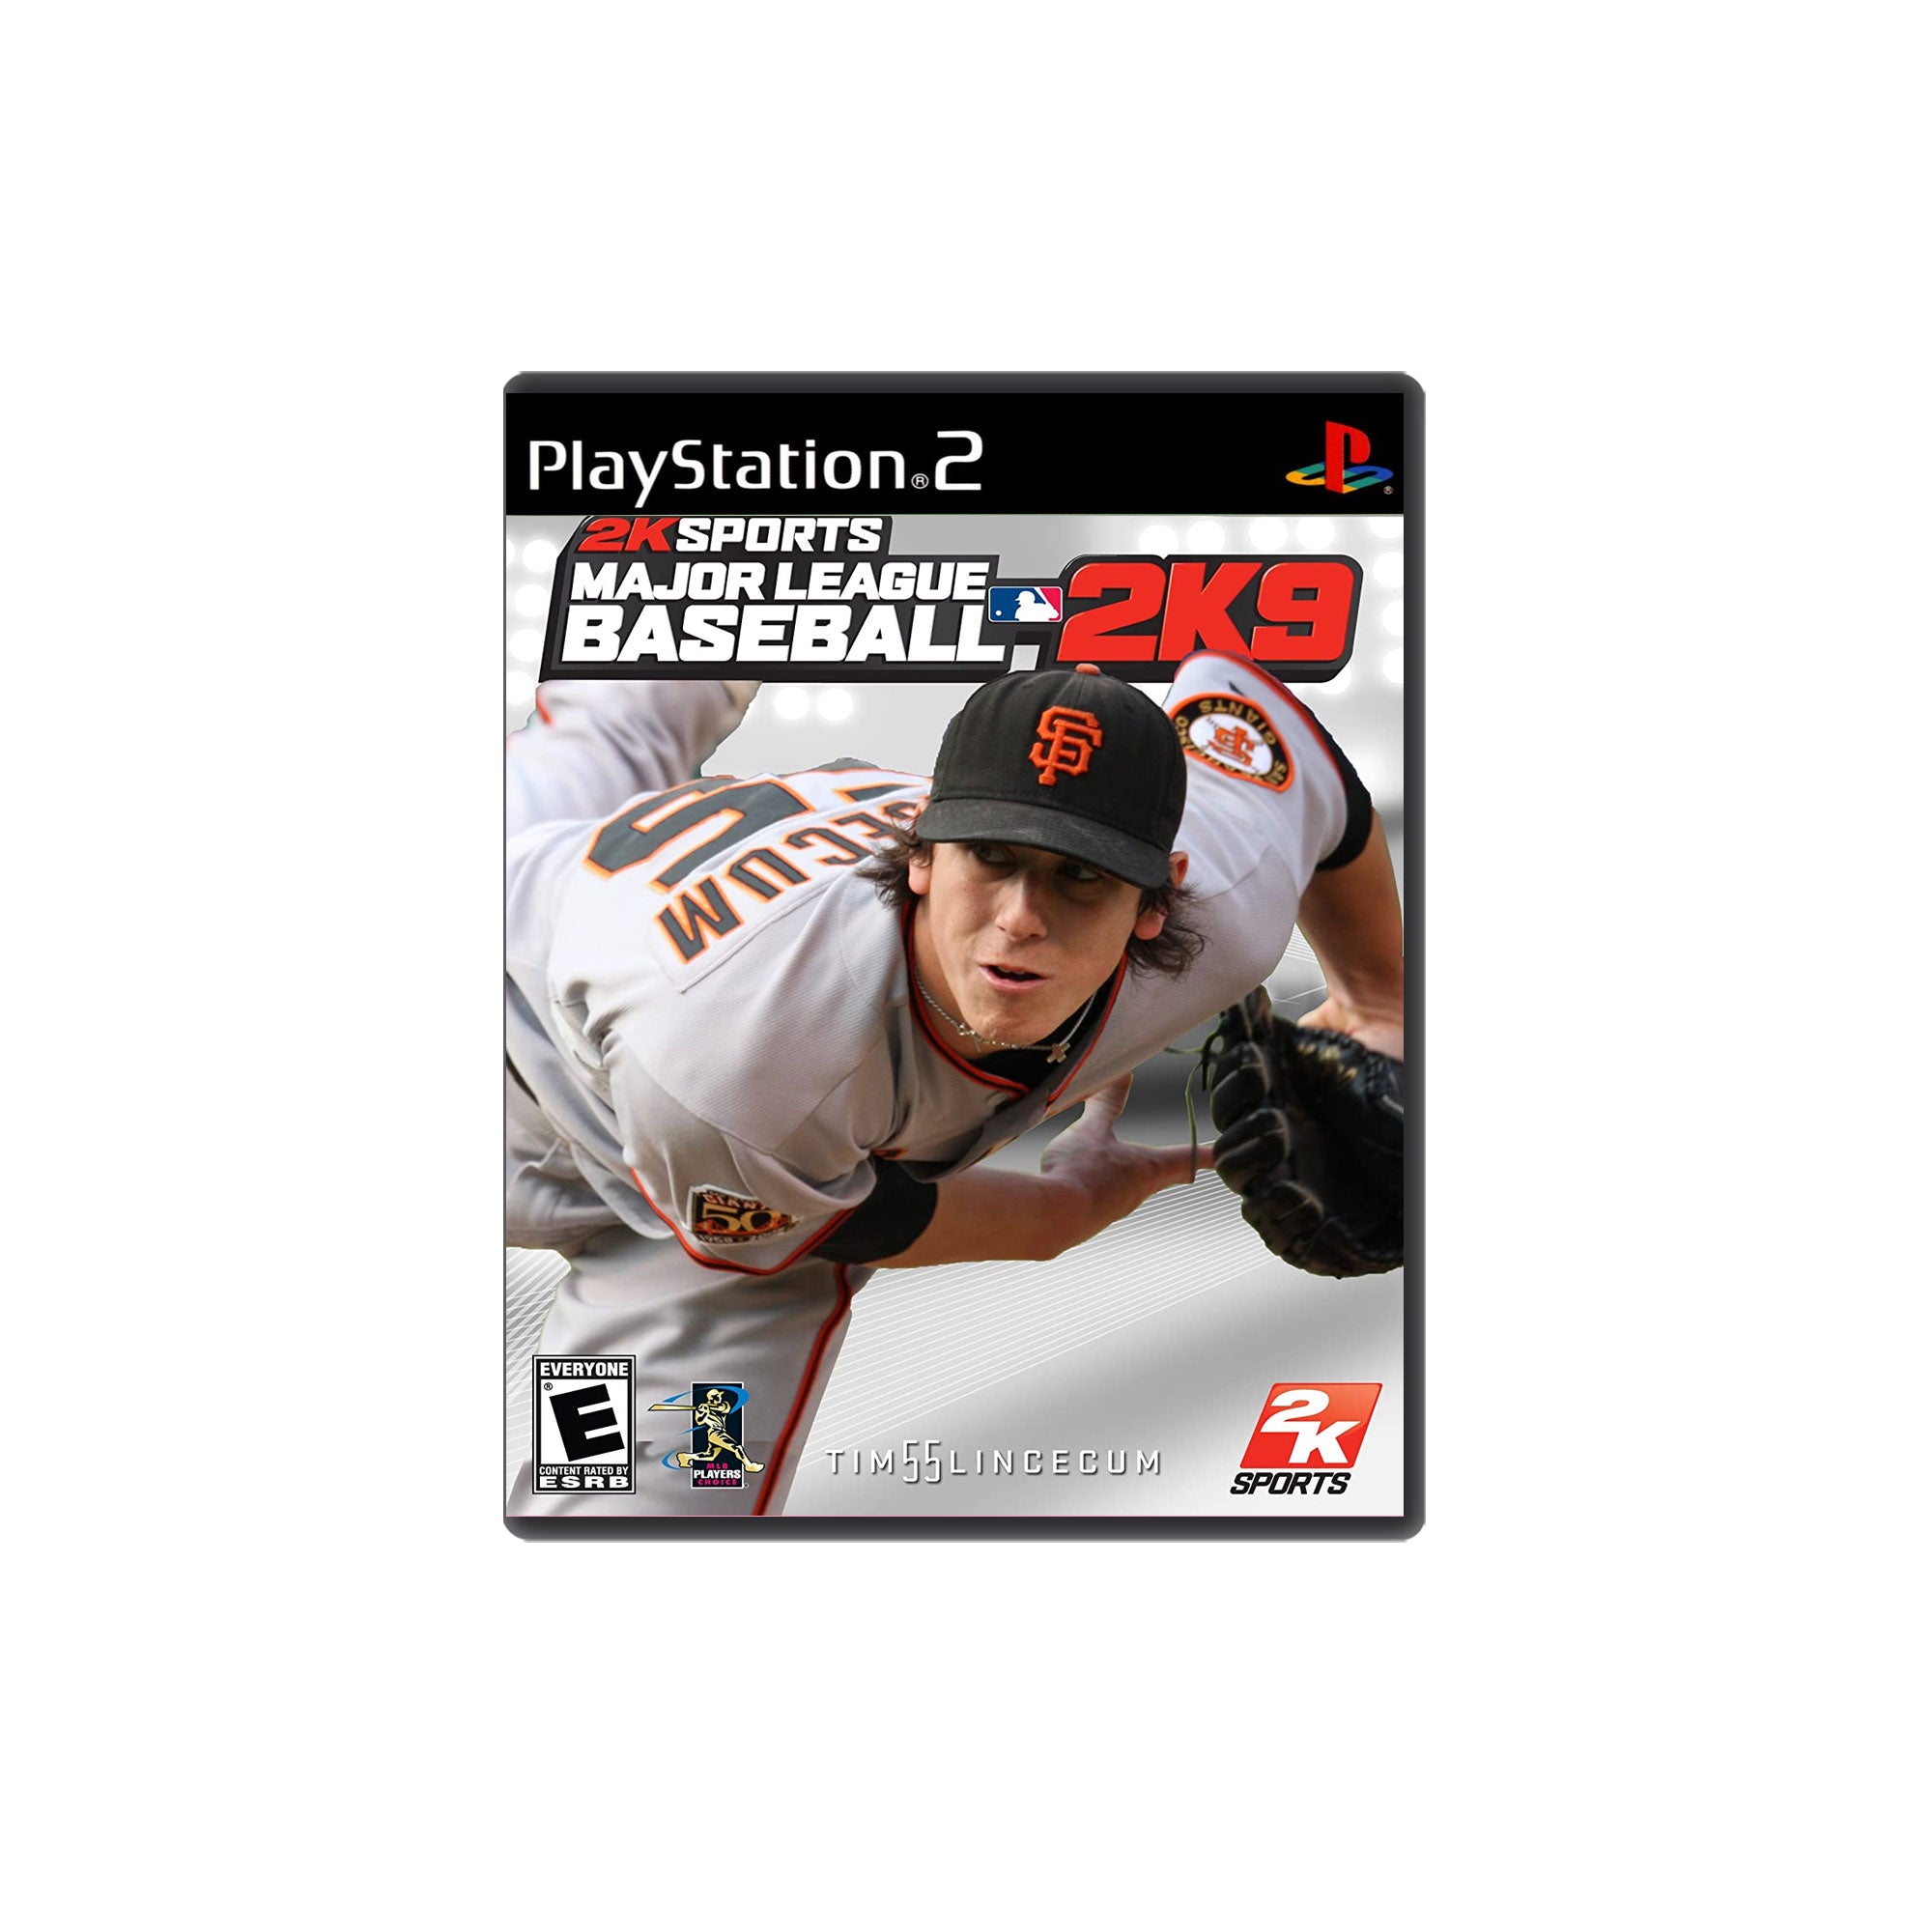 Swifty Games - Major League Baseball 2k9 (Playstation 2, 2008)